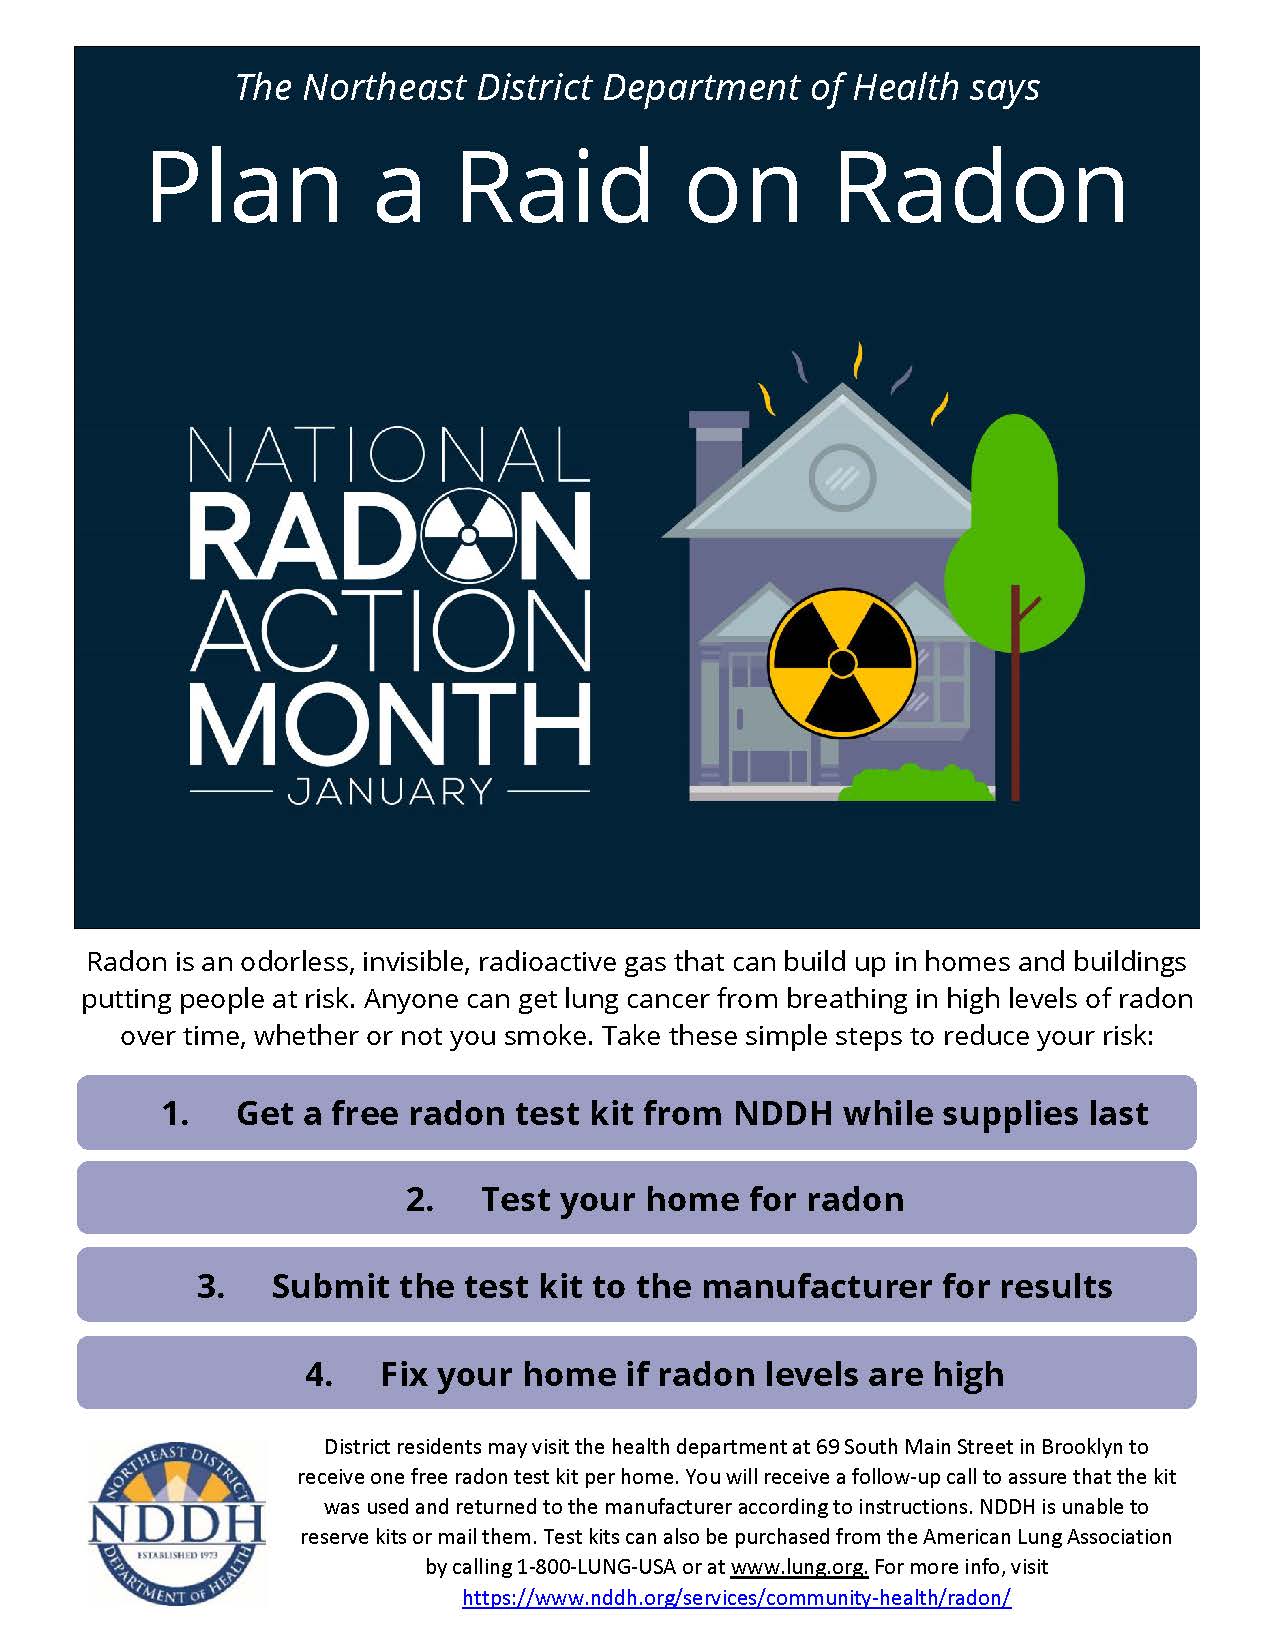 Prevent Lung Cancer: Test for Radon